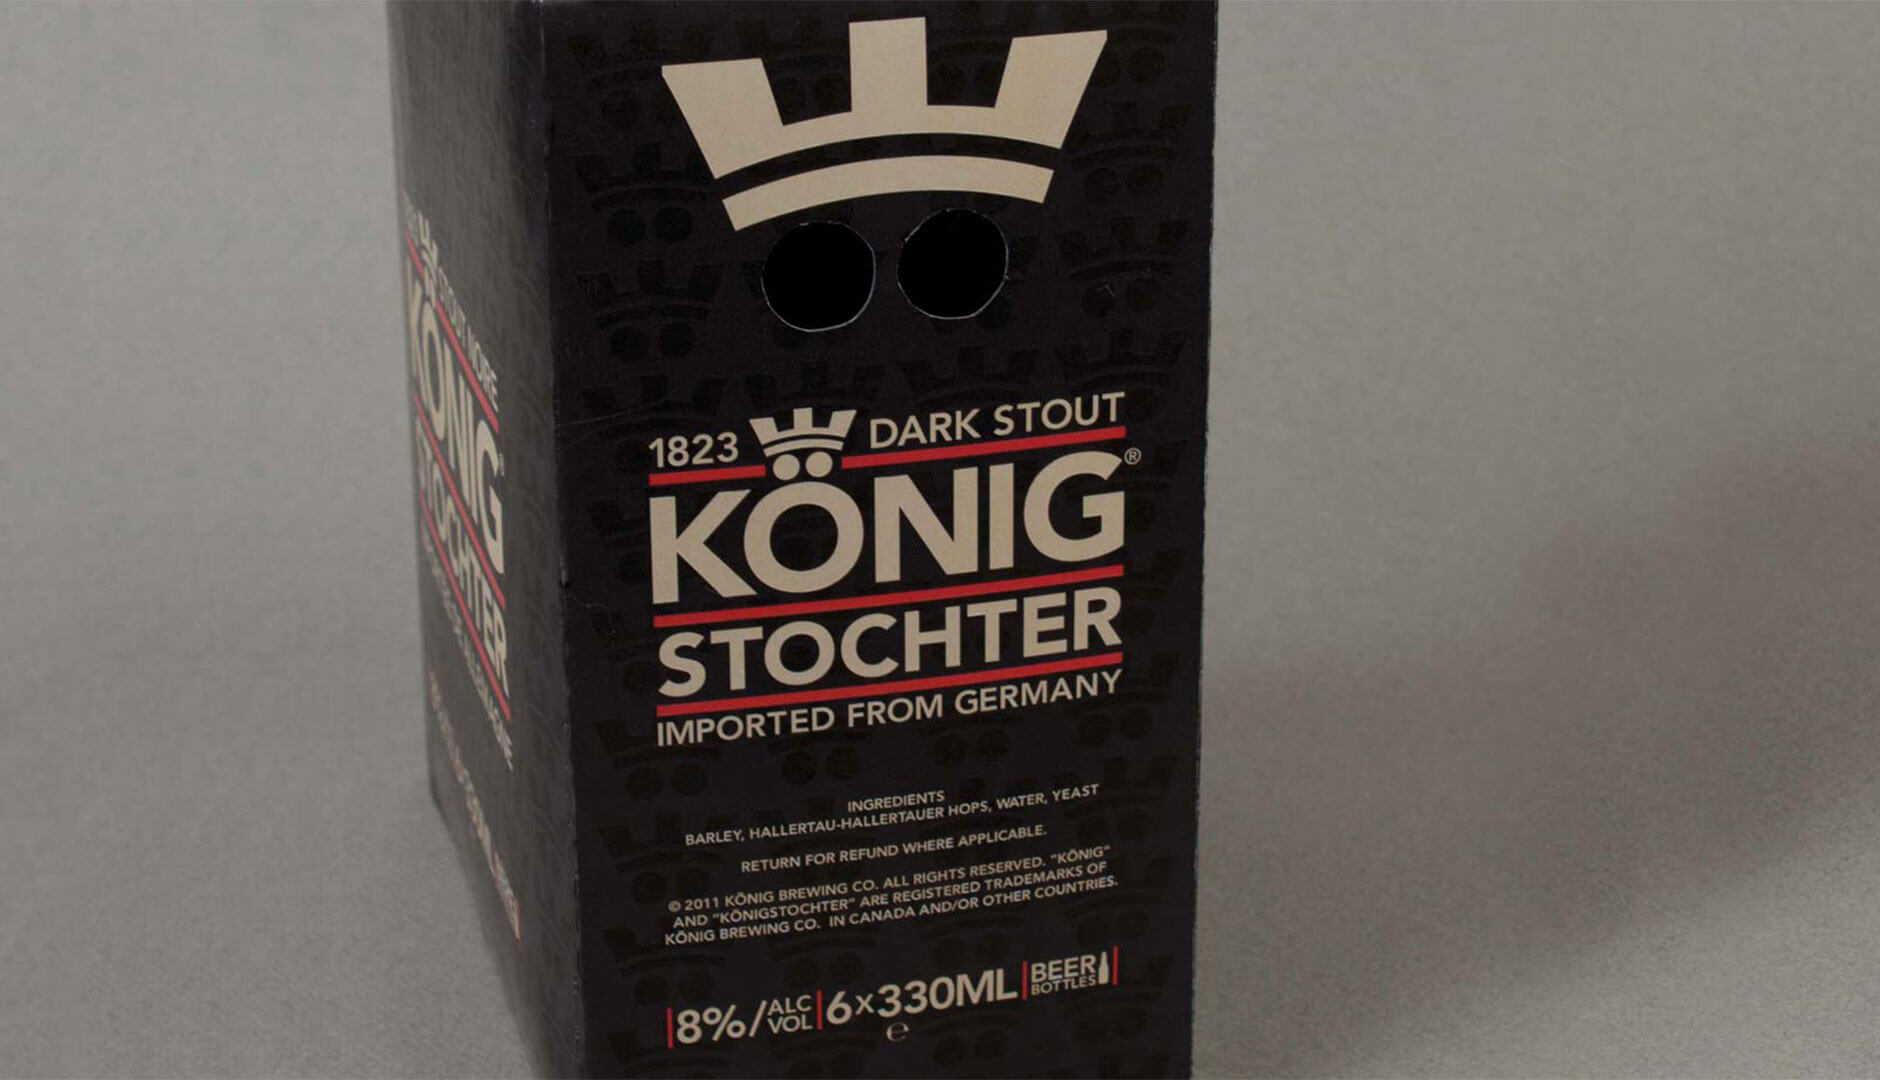 Königstochter Beer Branding Image 4